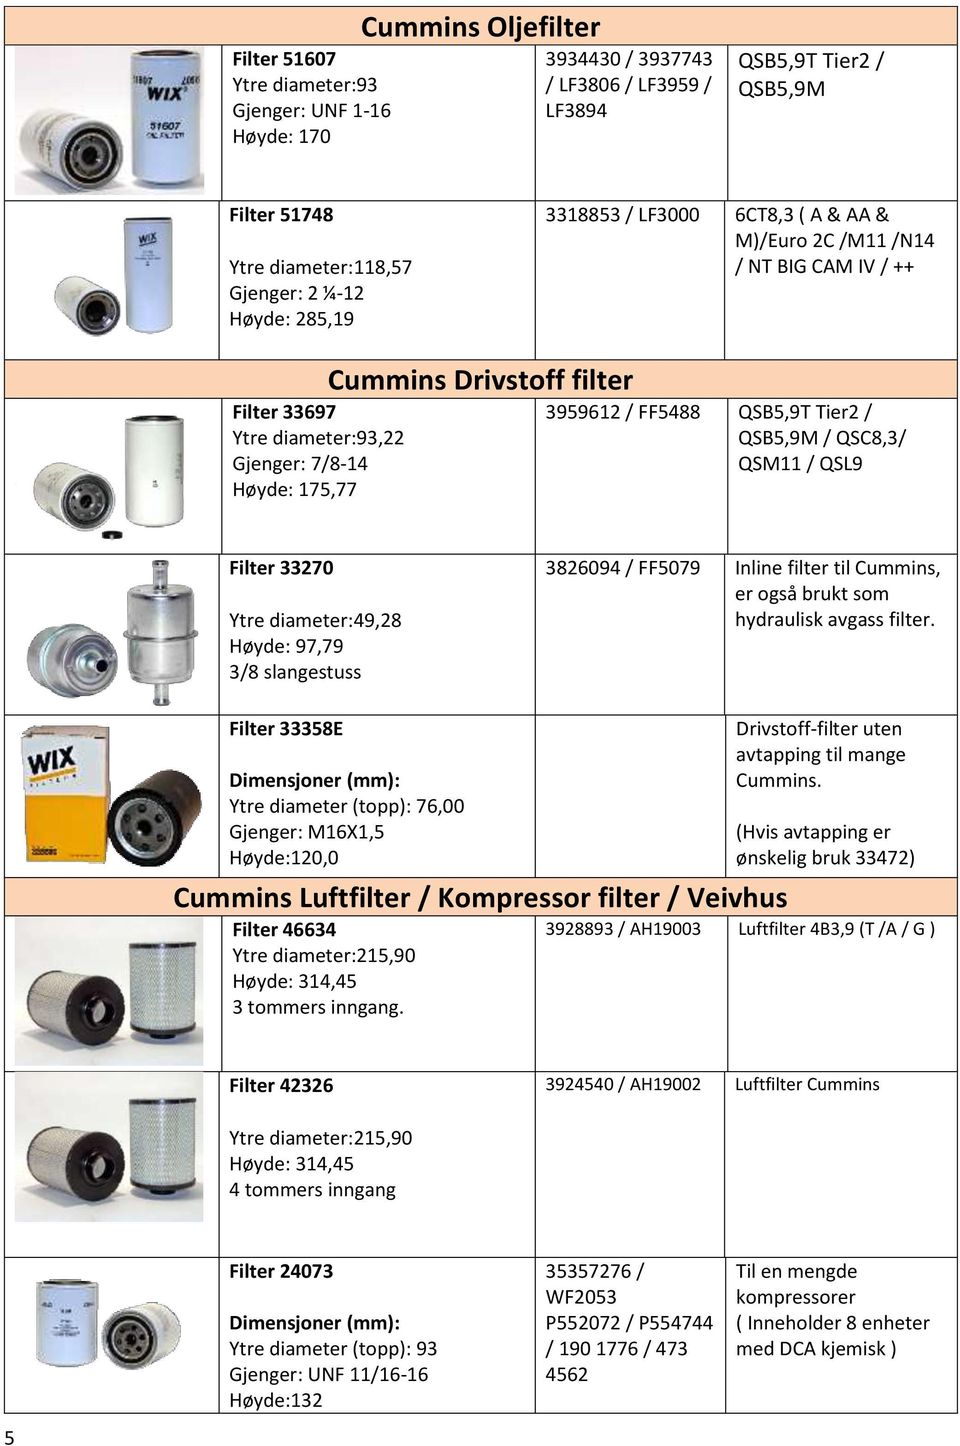 QSB5,9T Tier2 / QSB5,9M / QSC8,3/ QSM11 / QSL9 Filter 33270 Ytre diameter:49,28 Høyde: 97,79 3/8 slangestuss 3826094 / FF5079 Inline filter til Cummins, er også brukt som hydraulisk avgass filter.